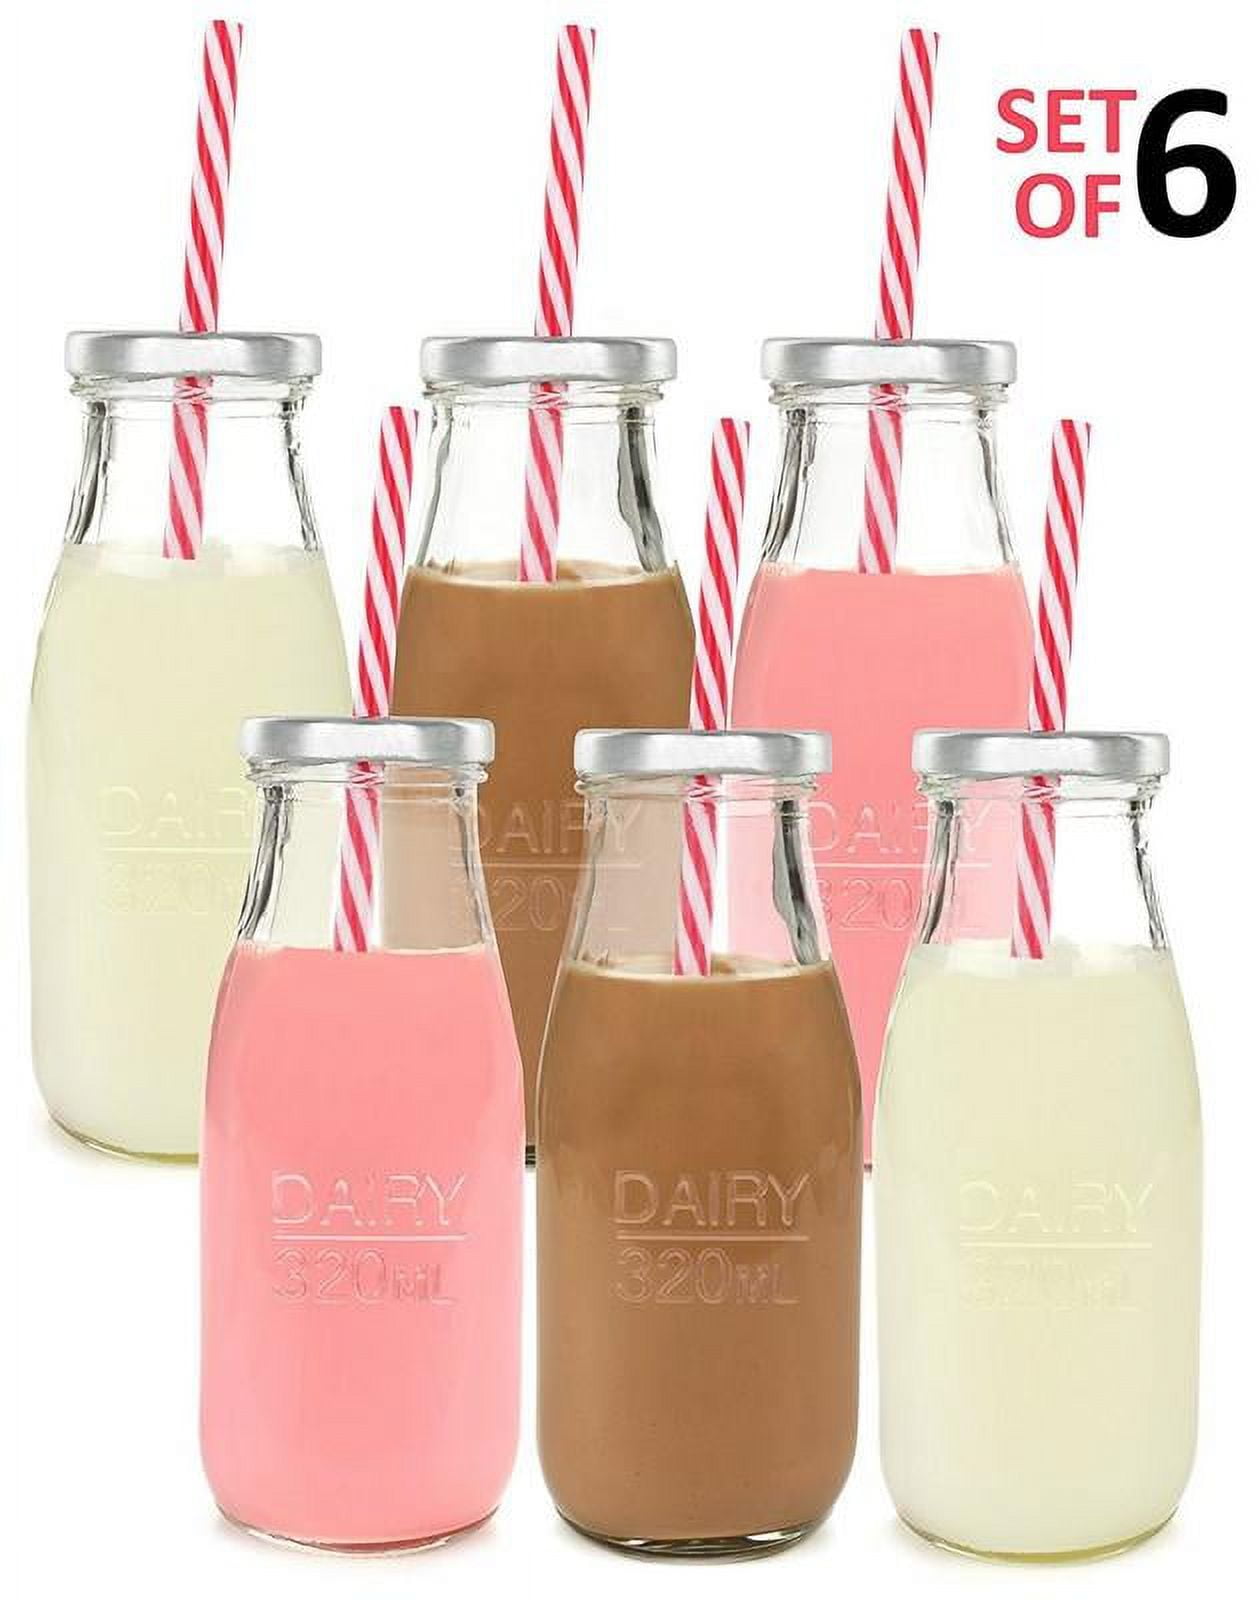 YEBODA 11oz Glass Milk Bottles with Reusable Metal Twist Lids and